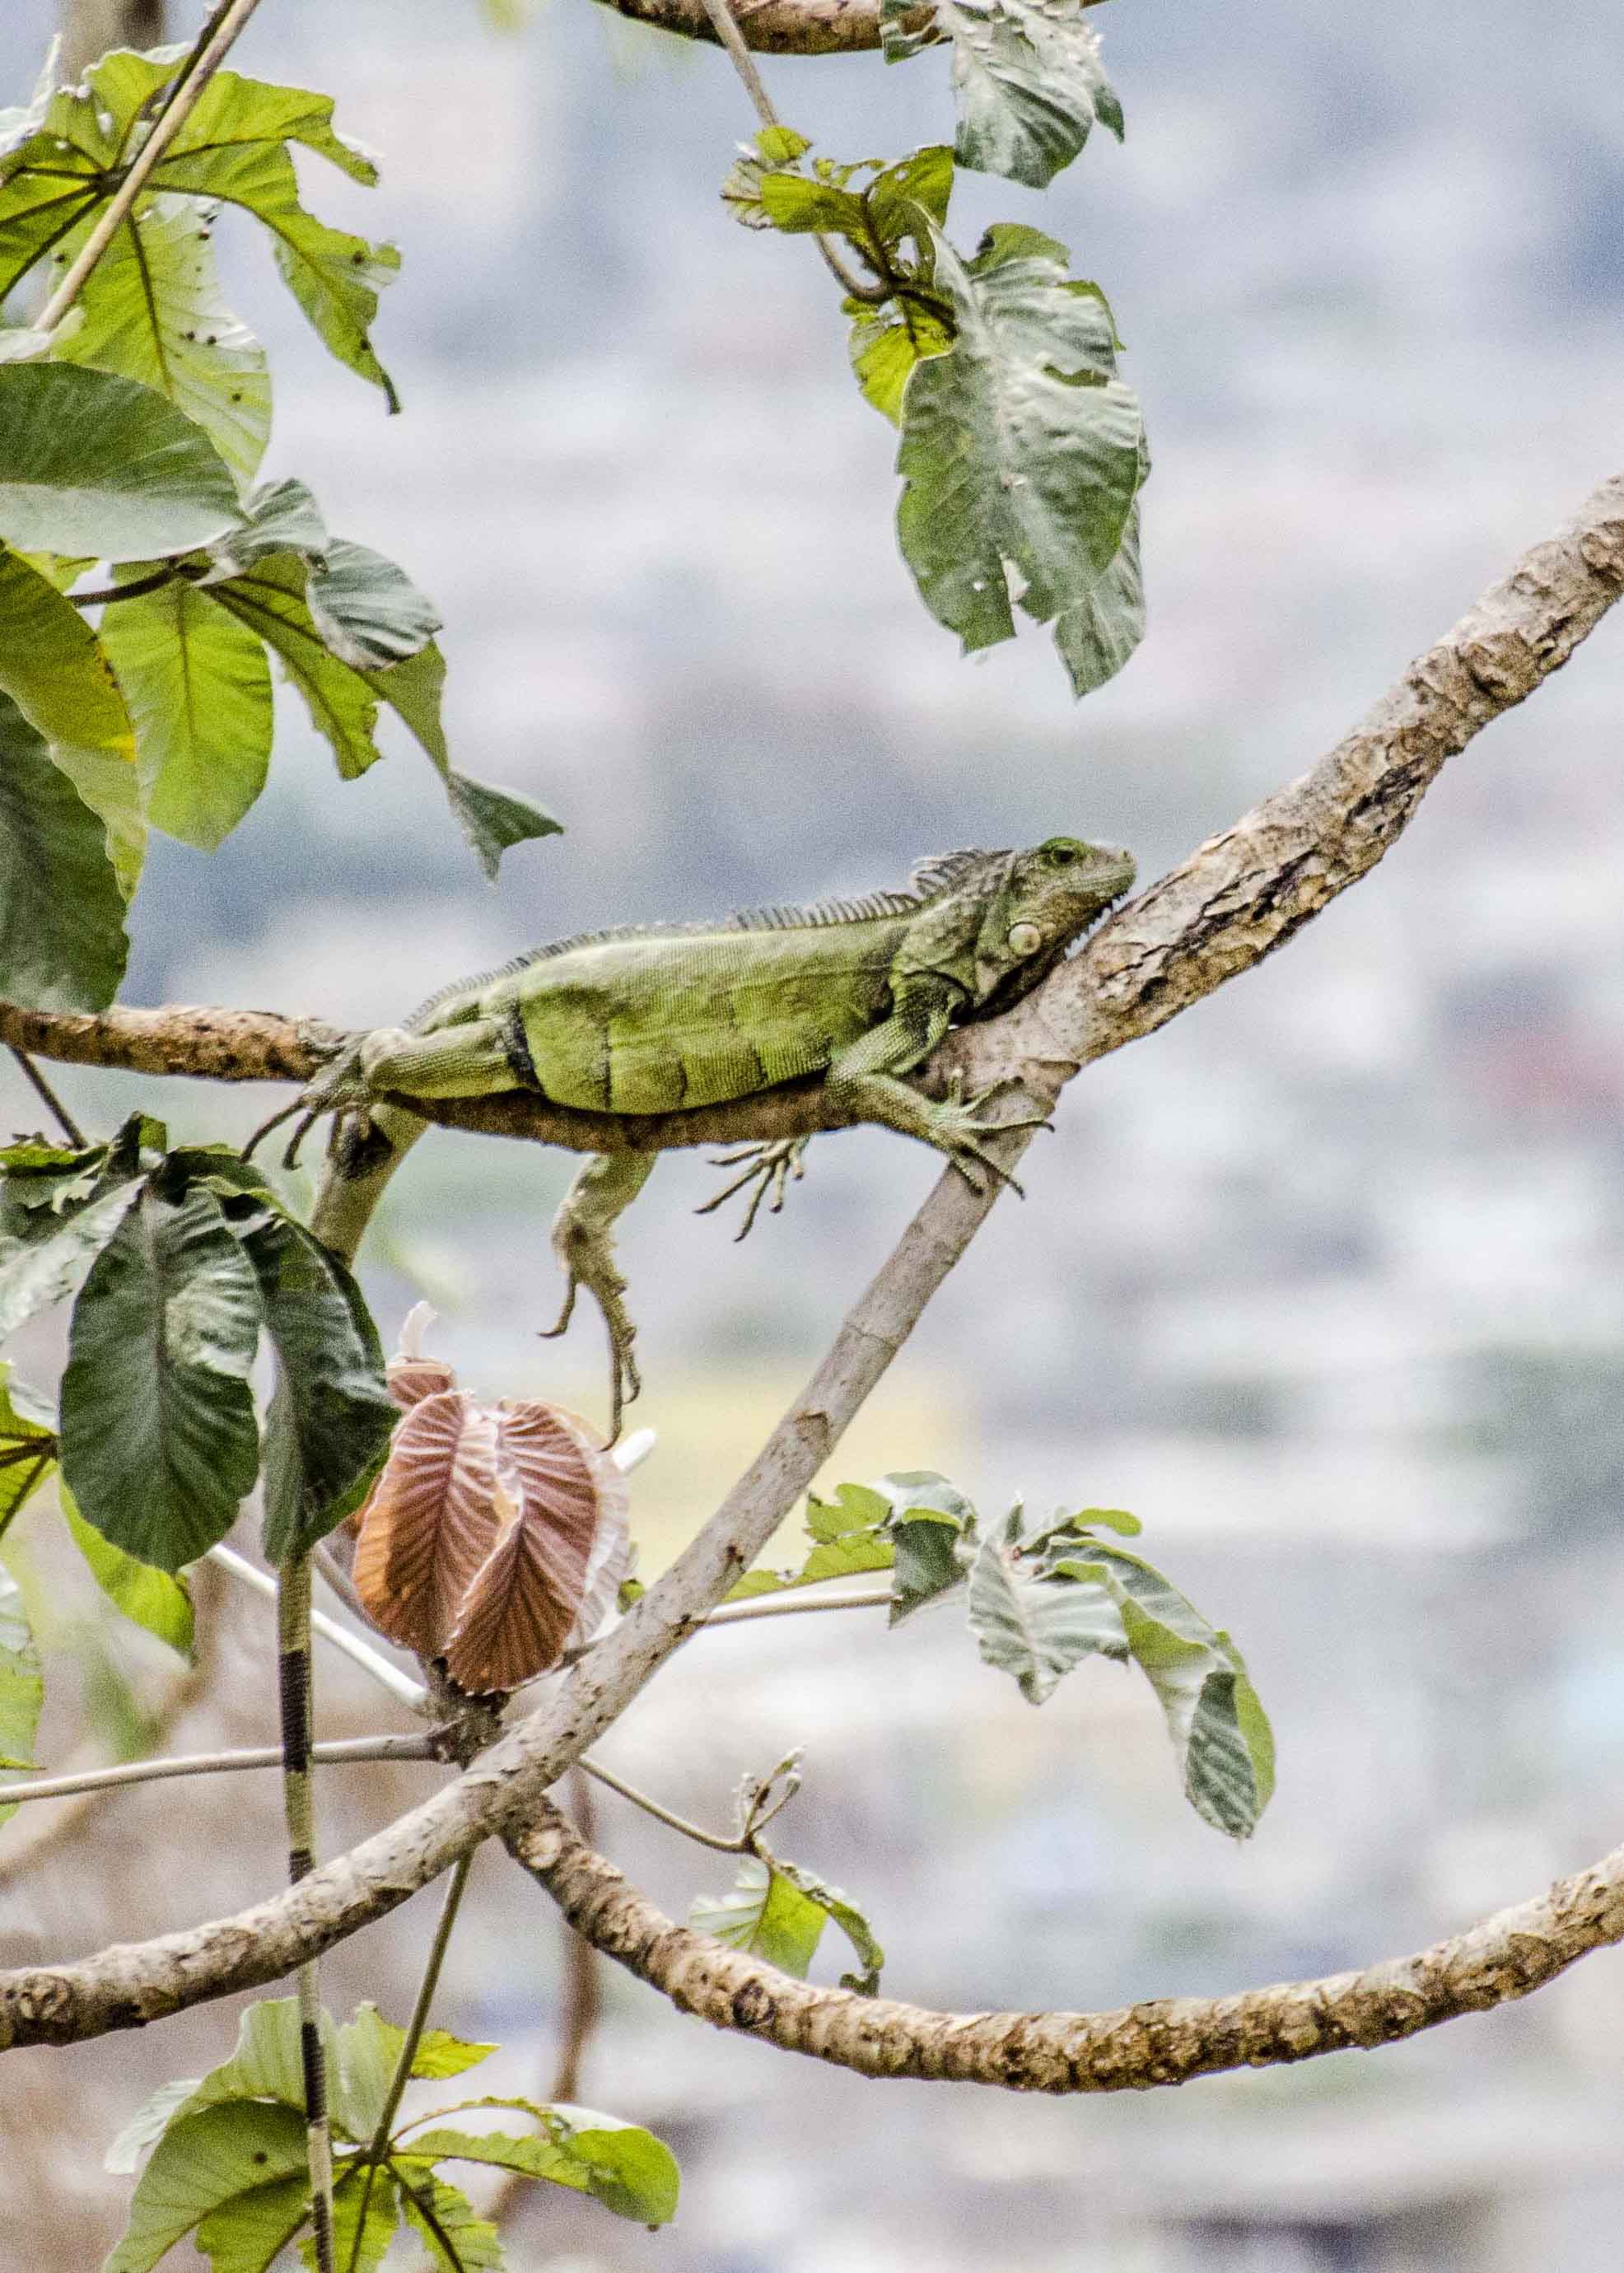 Green Iguana, Botanical Garden, Guayaquil, Ecuador | ©Angela Drake